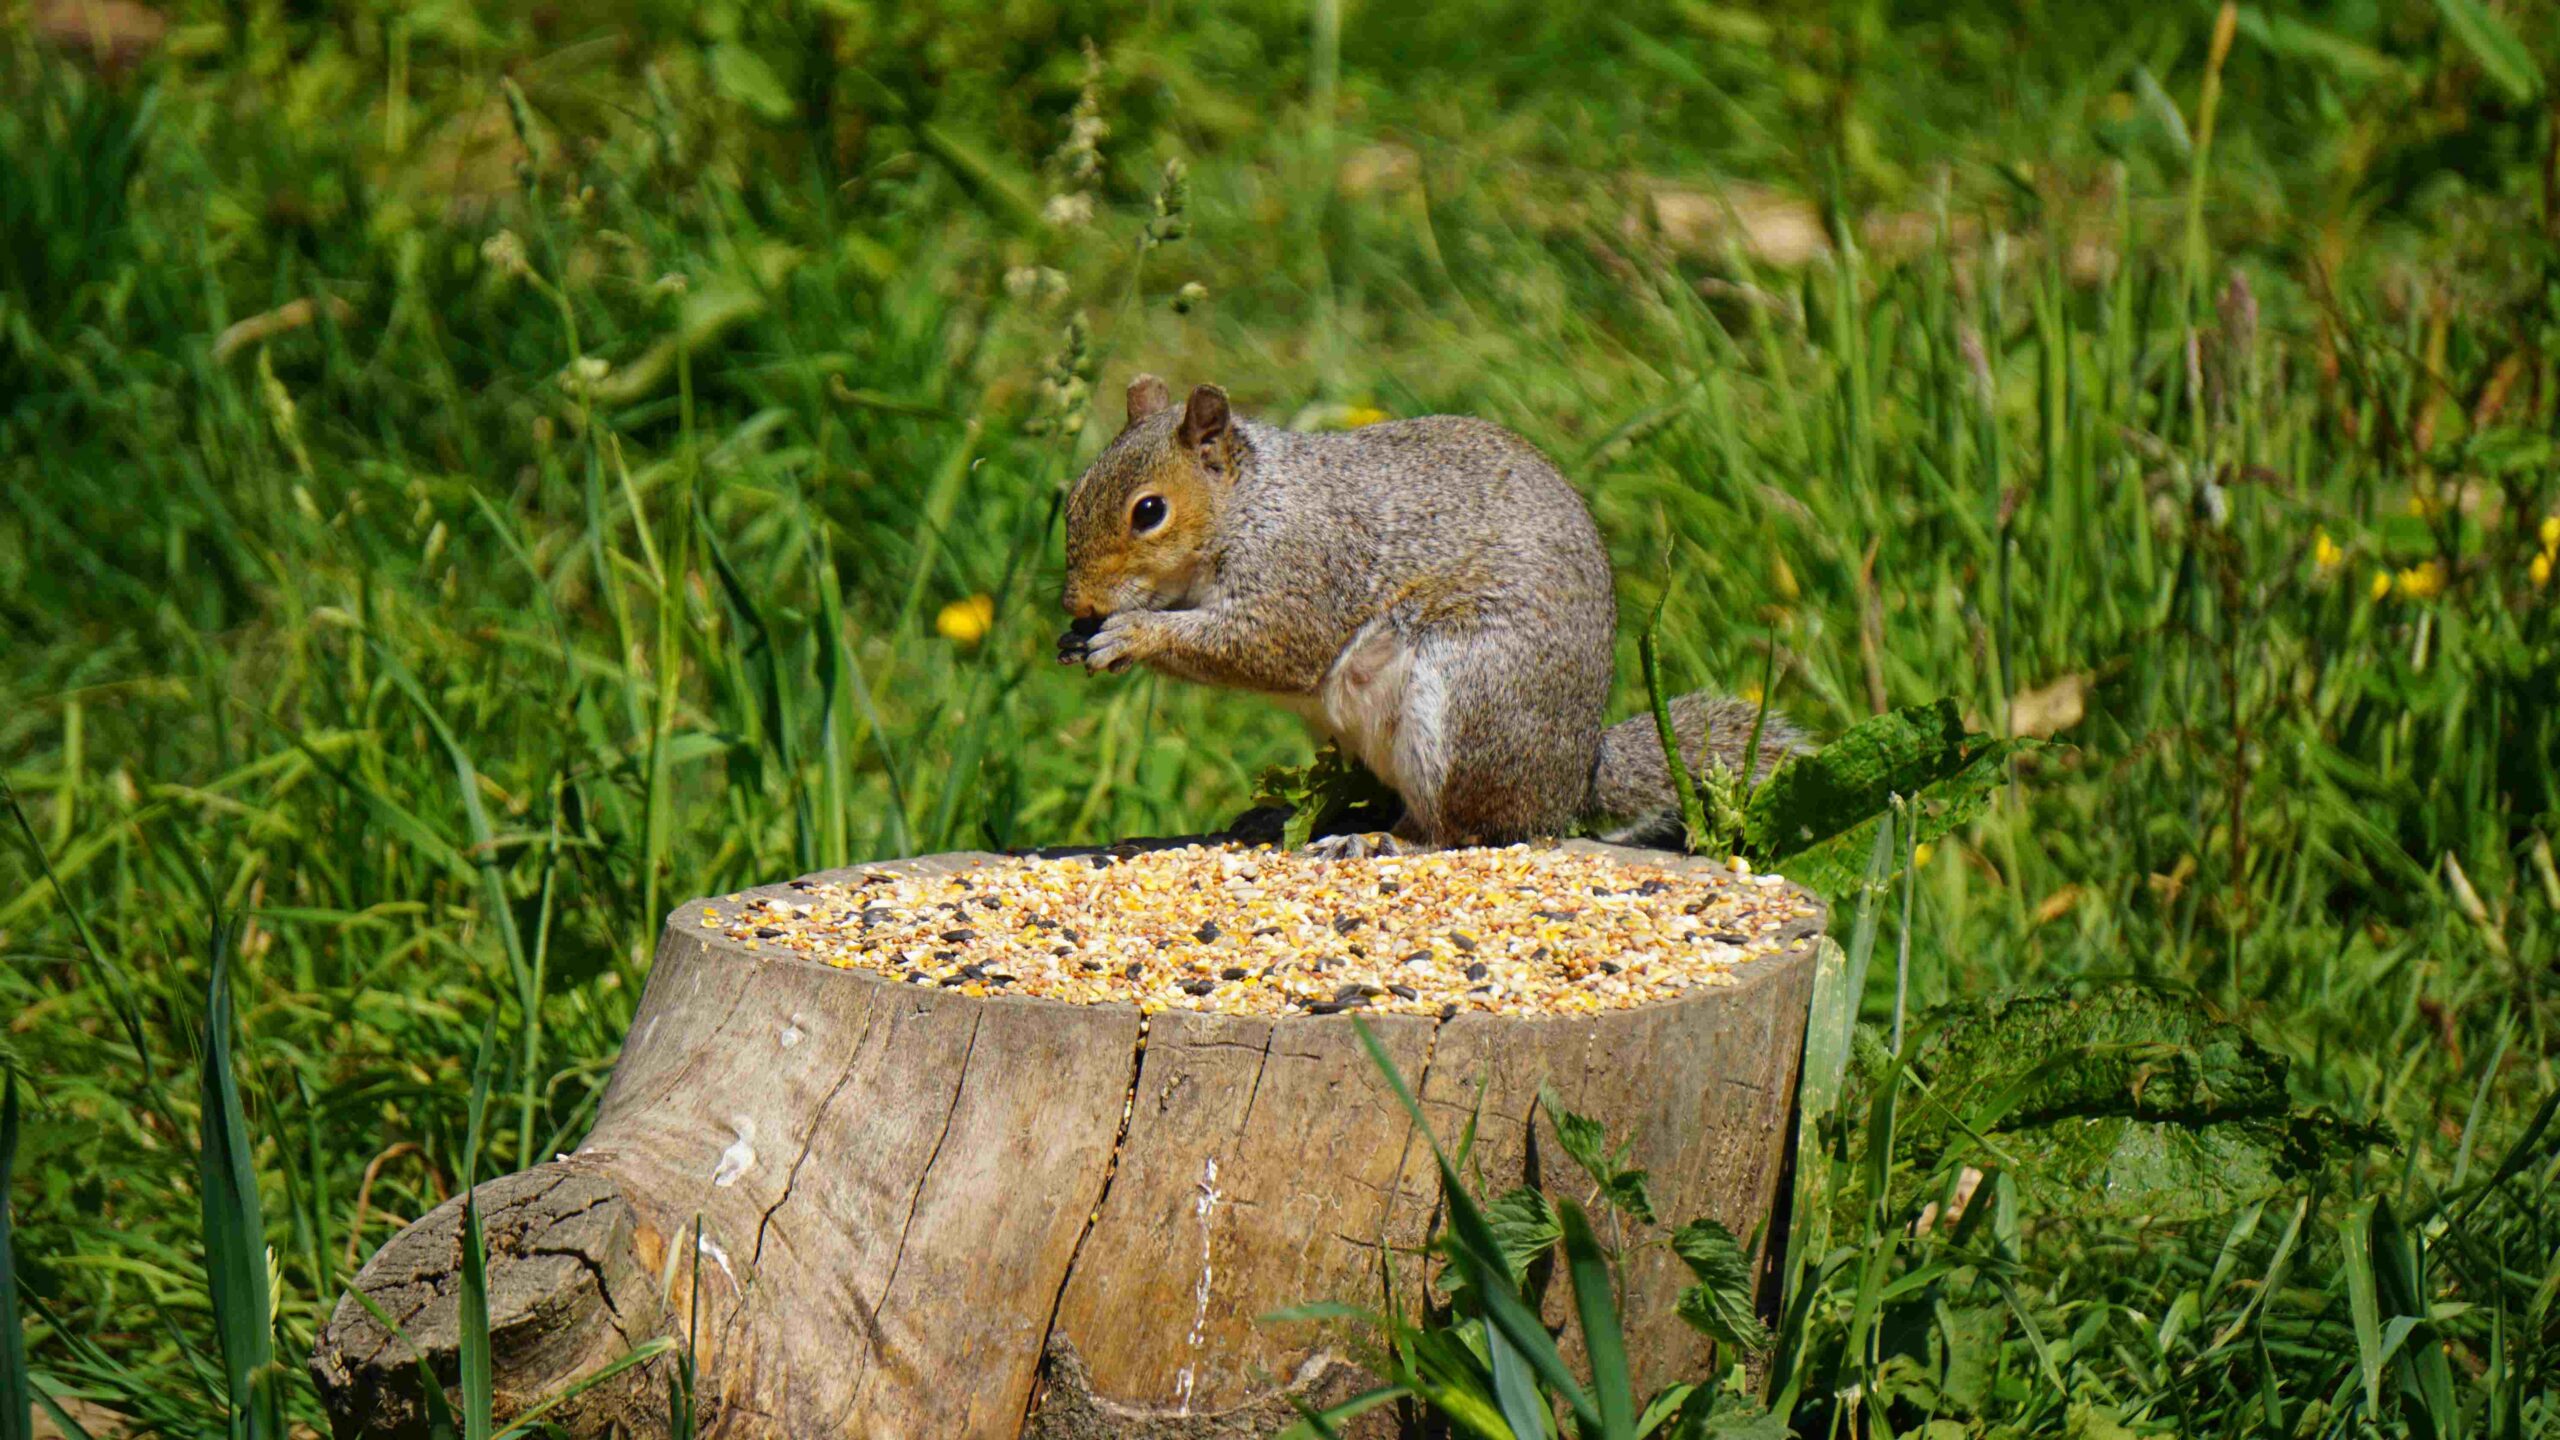 Squirrel eating seeds on tree stump